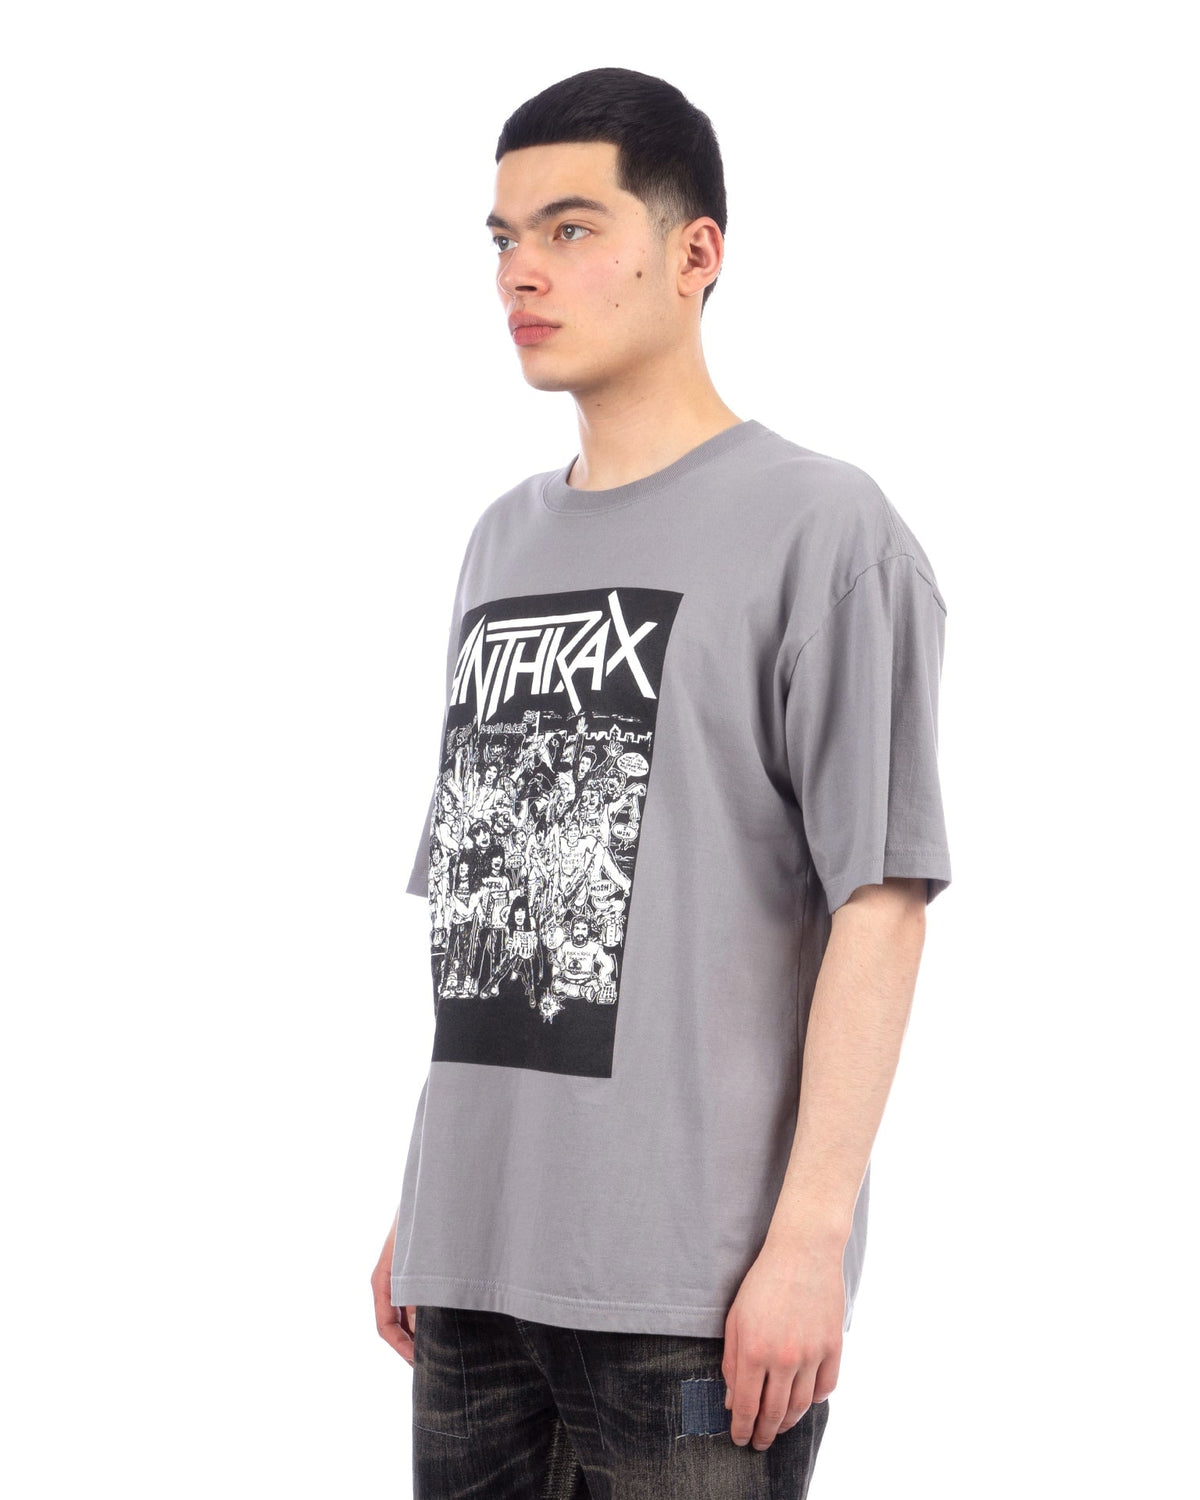 NEIGHBORHOOD | x ANTHRAX T-Shirt-2 Gray - Concrete